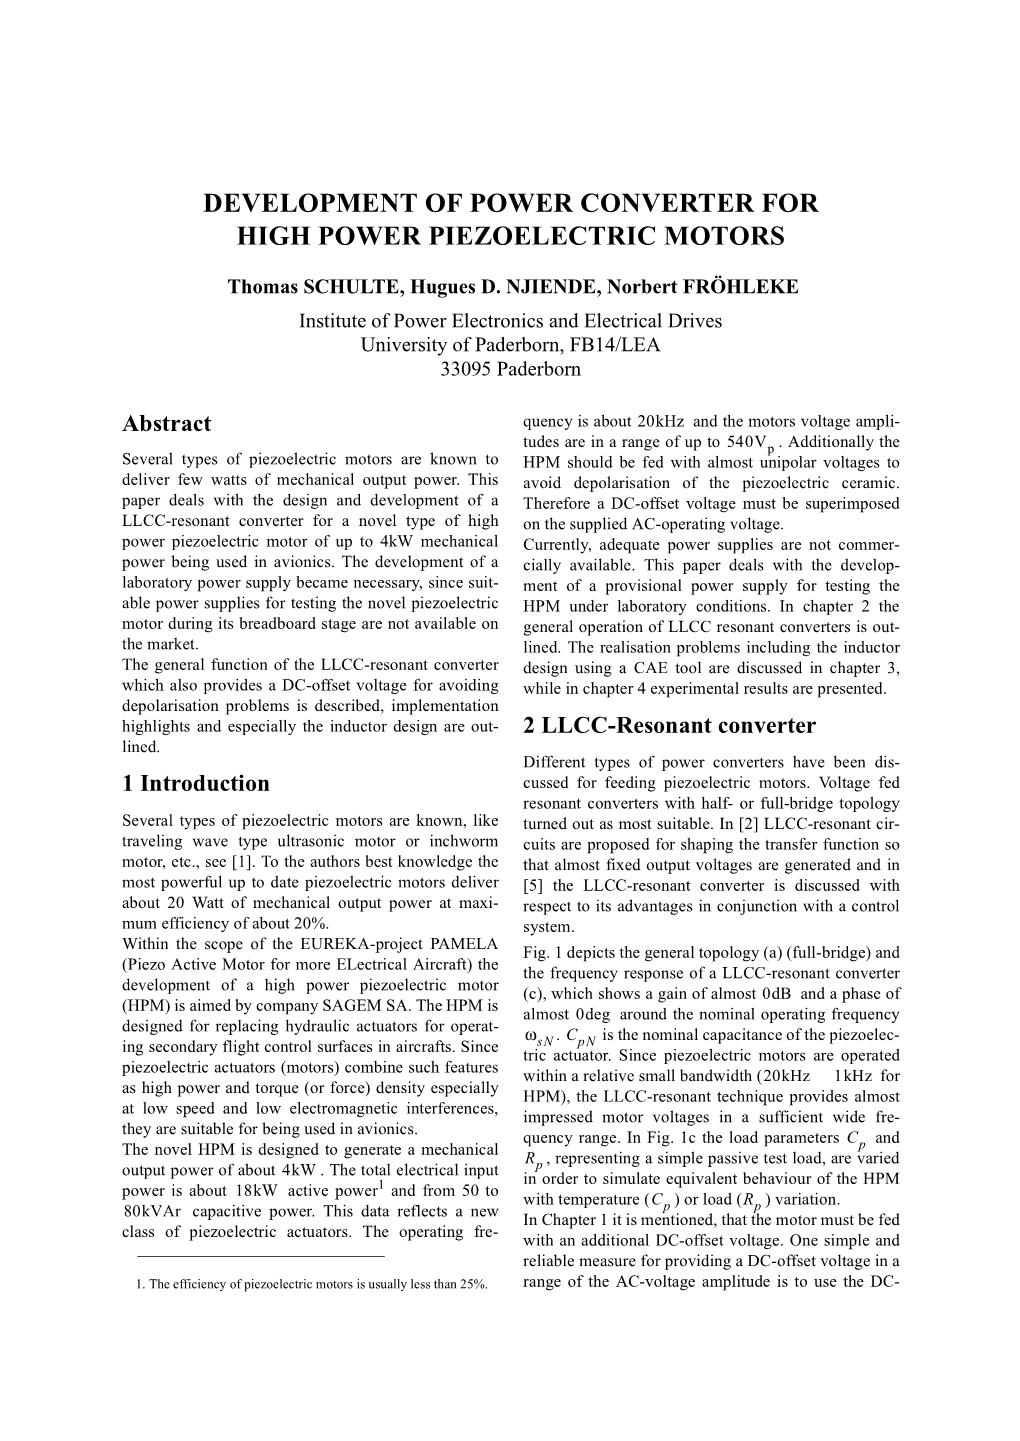 Development of Power Converter for High Power Piezoelectric Motors